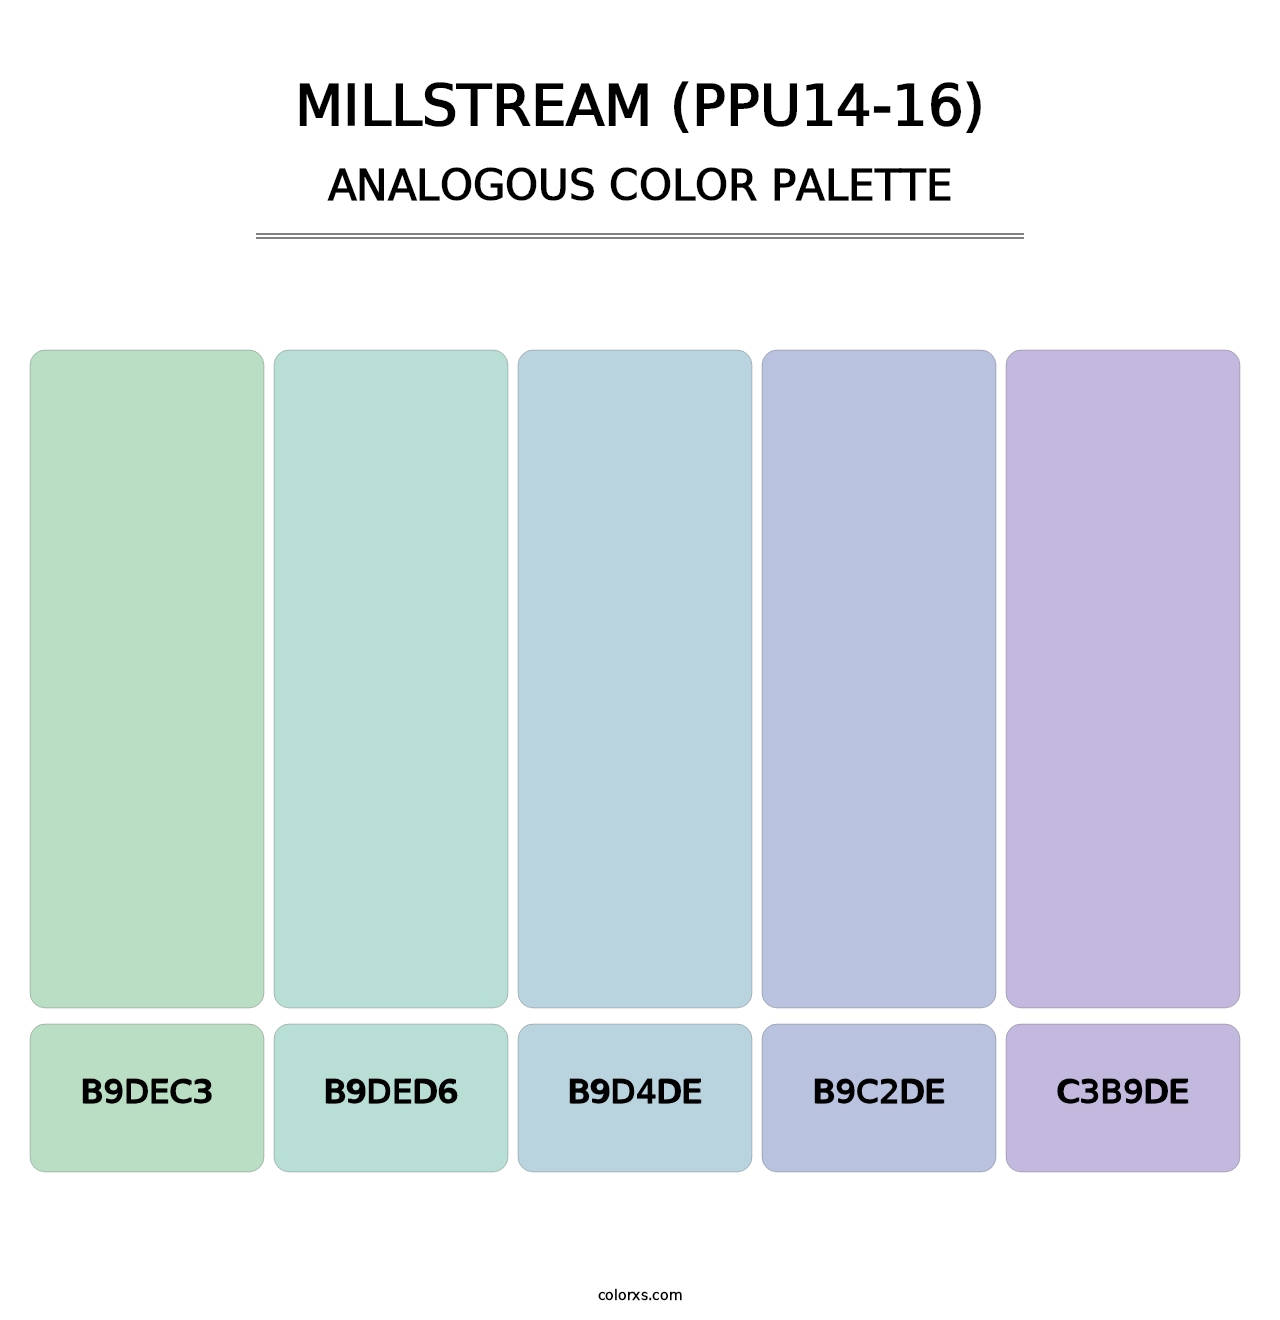 Millstream (PPU14-16) - Analogous Color Palette